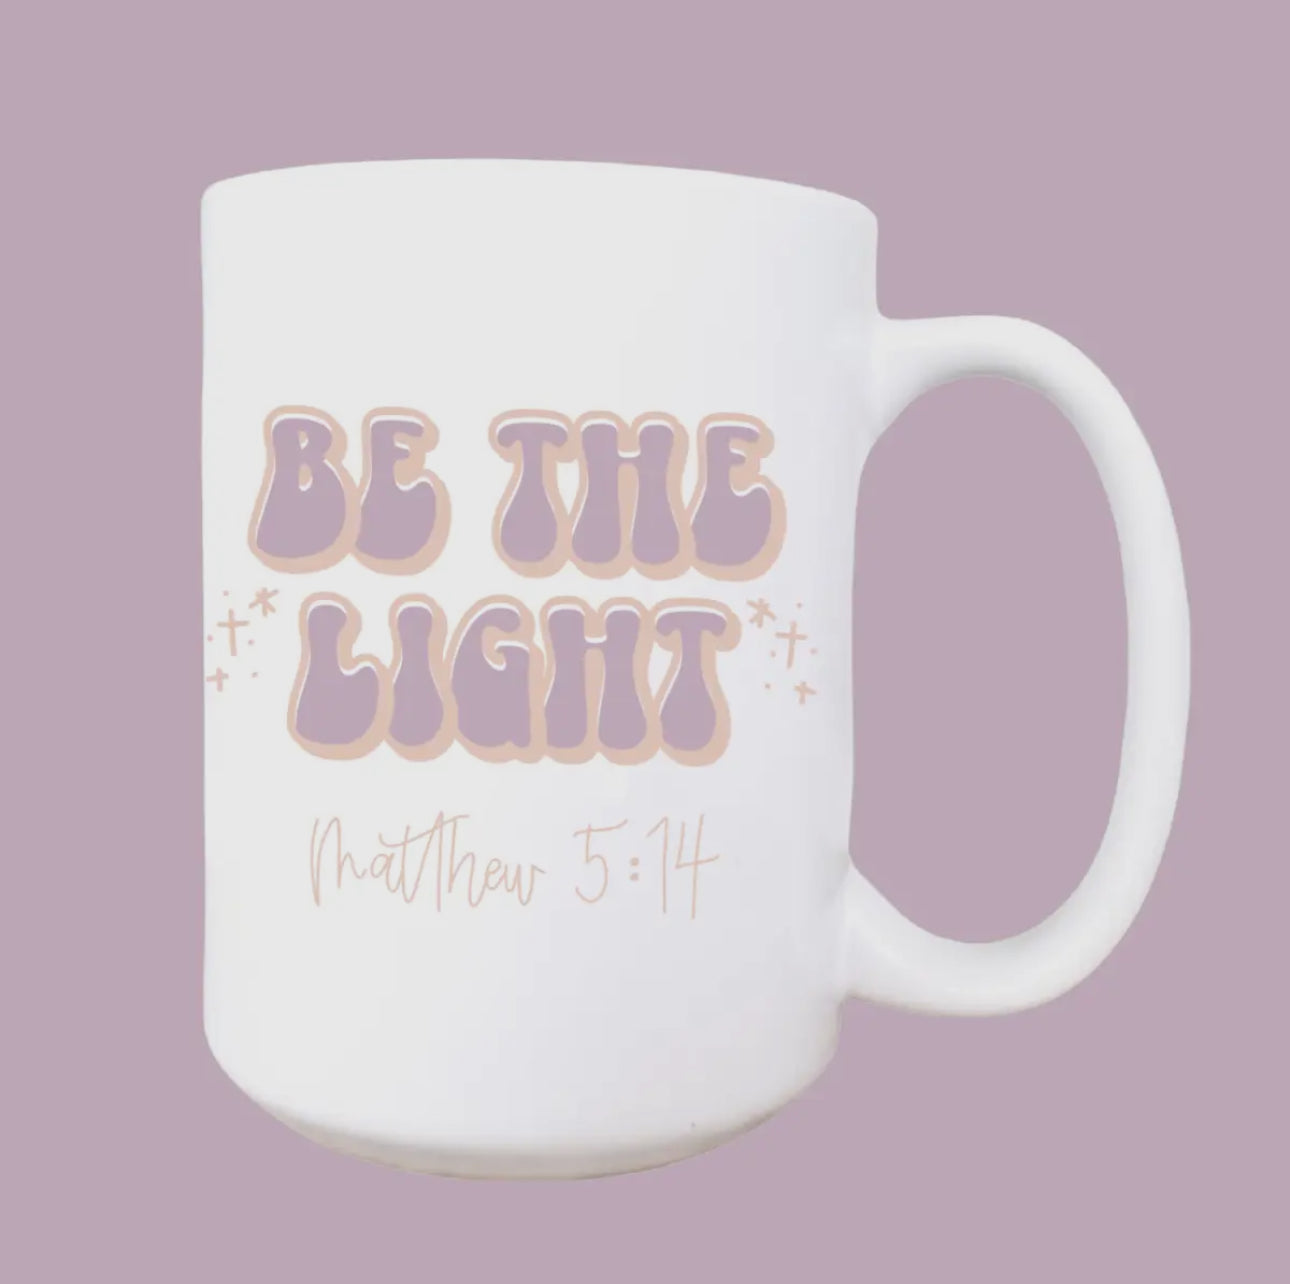 Be The Light Coffee Mug